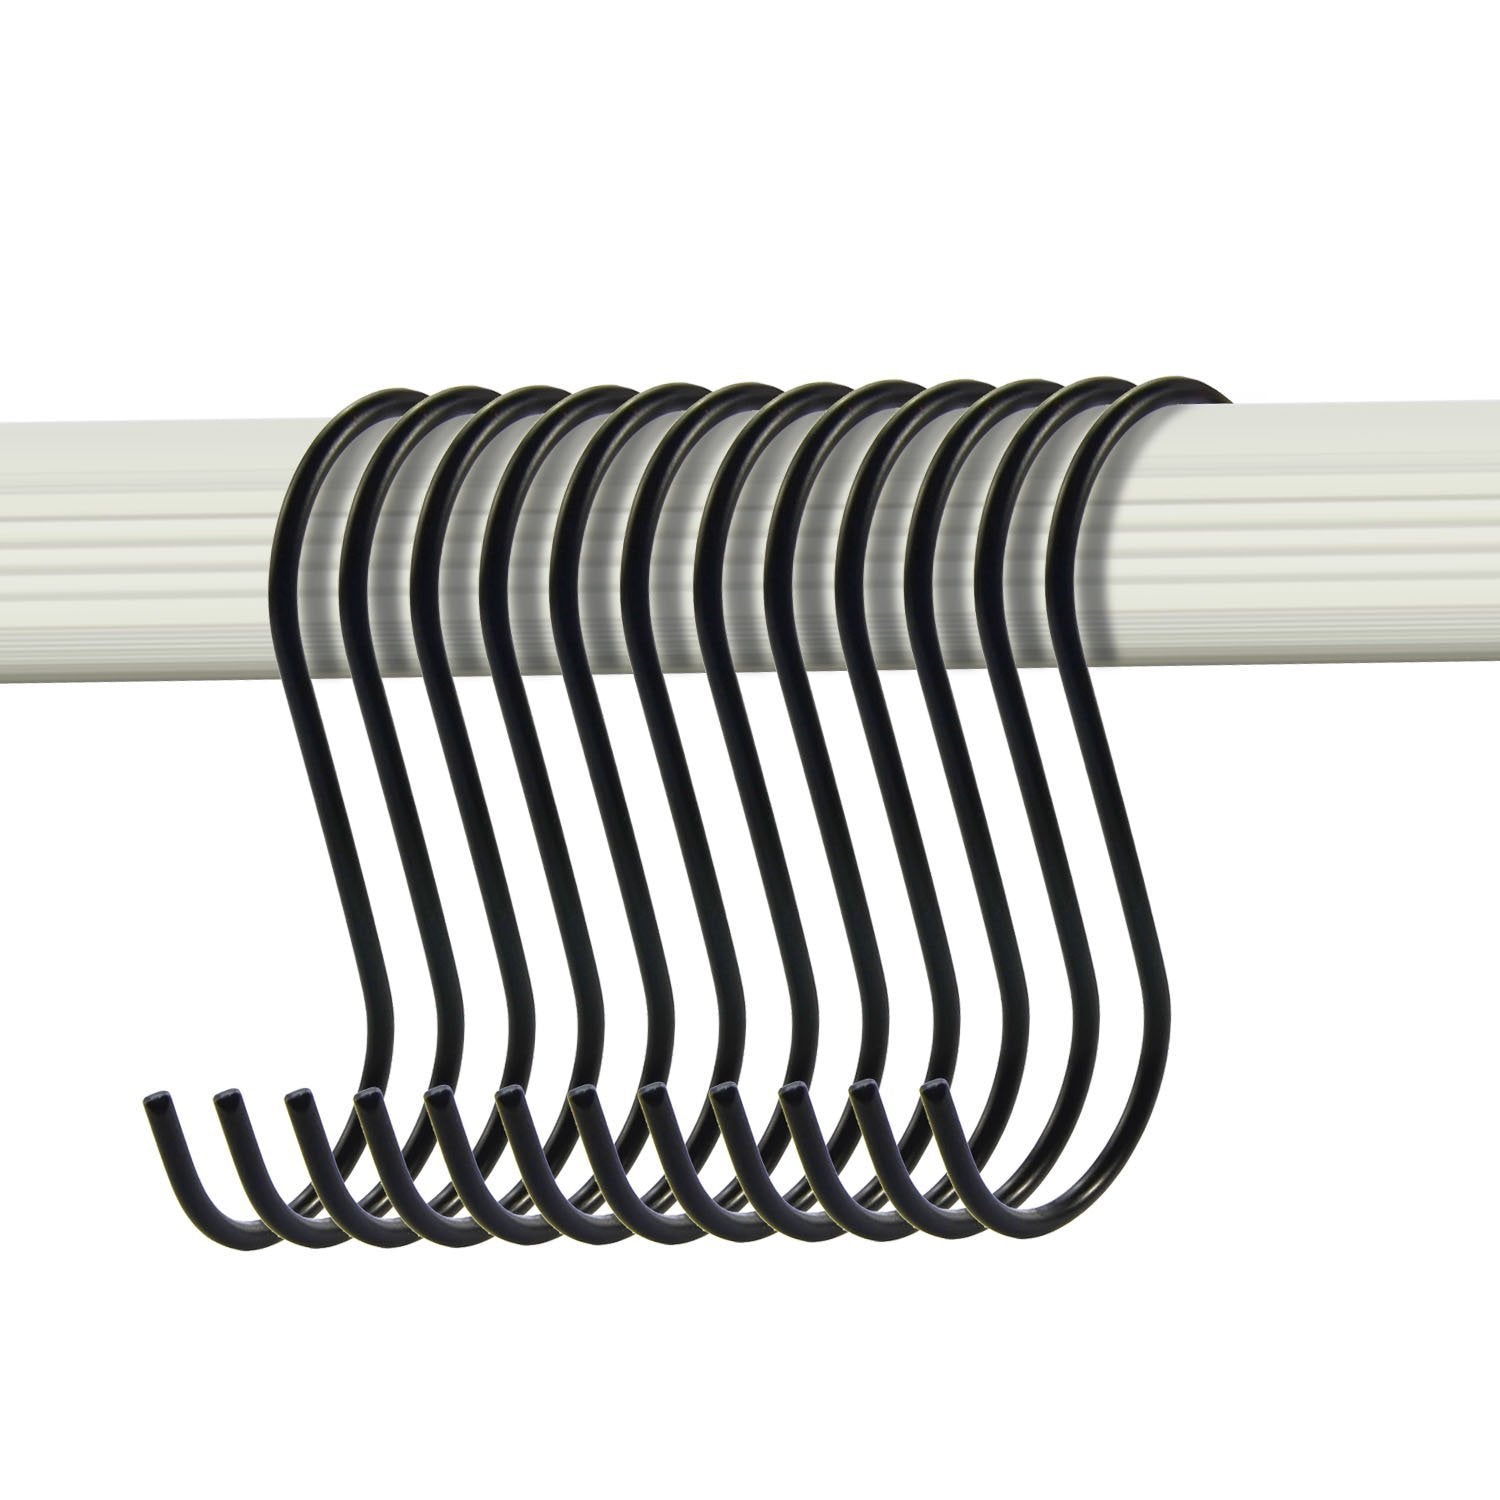 Antistatic Coating Black Universal Stainless Steel Metal S Hooks, RBSN S-type Hooks-Multiple Uses for Kitchenware , Pots , Utensils , Plants , Towels, Pack of 18